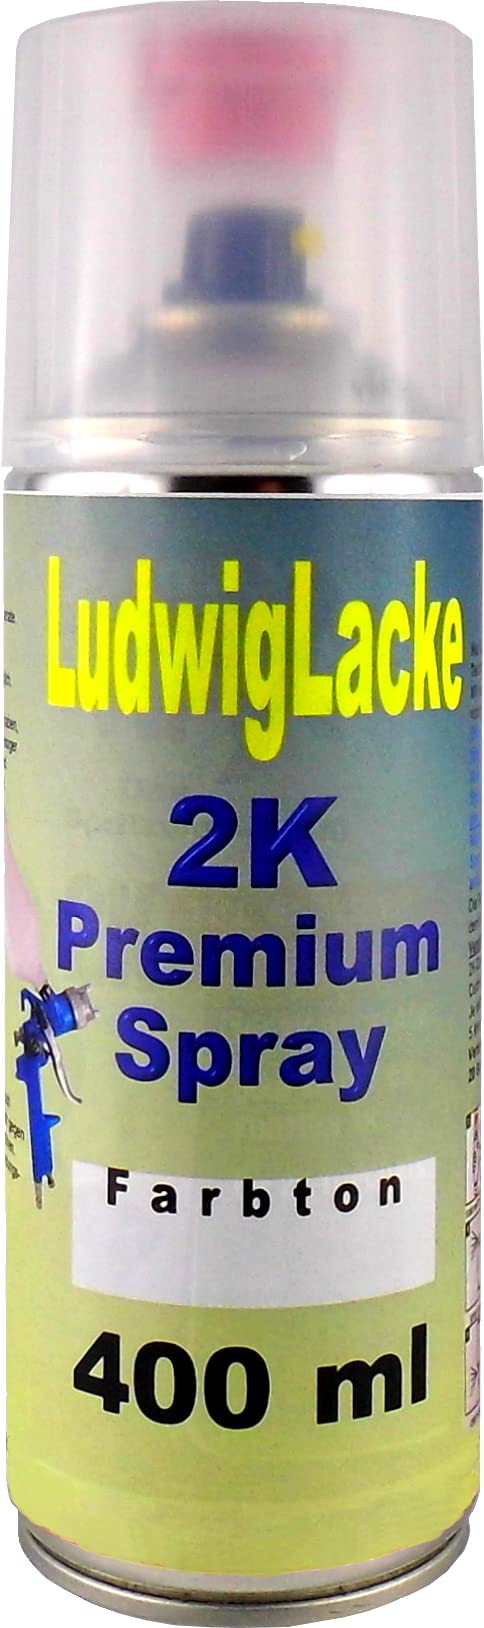 Ludwig Lacke RAL 7016 ANTHRAZITGRAU 2K Premium Spray 400ml von Ludwiglacke